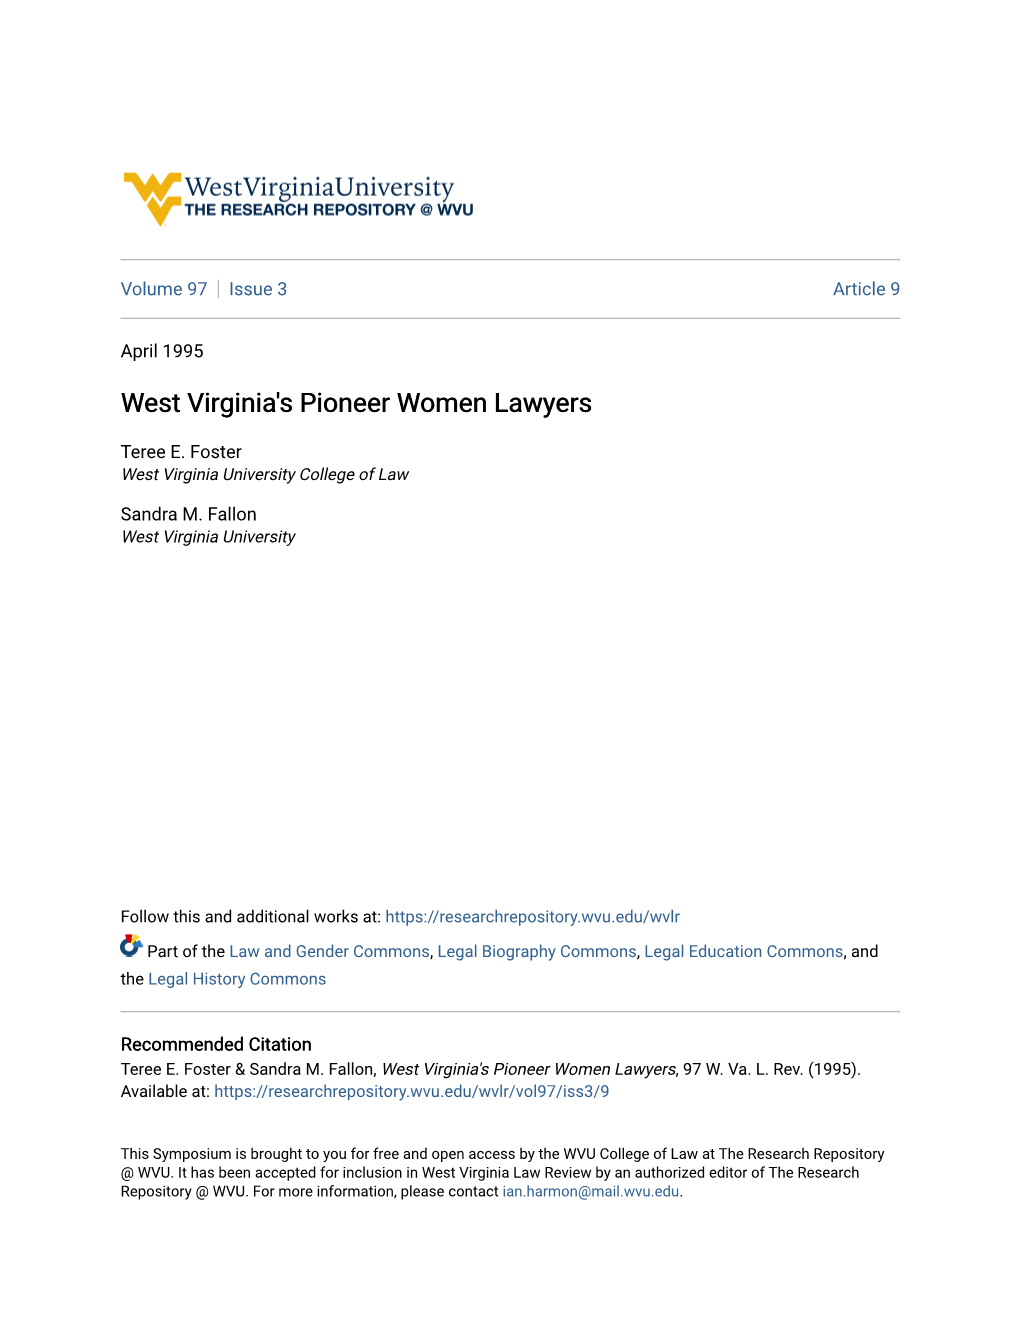 West Virginia's Pioneer Women Lawyers